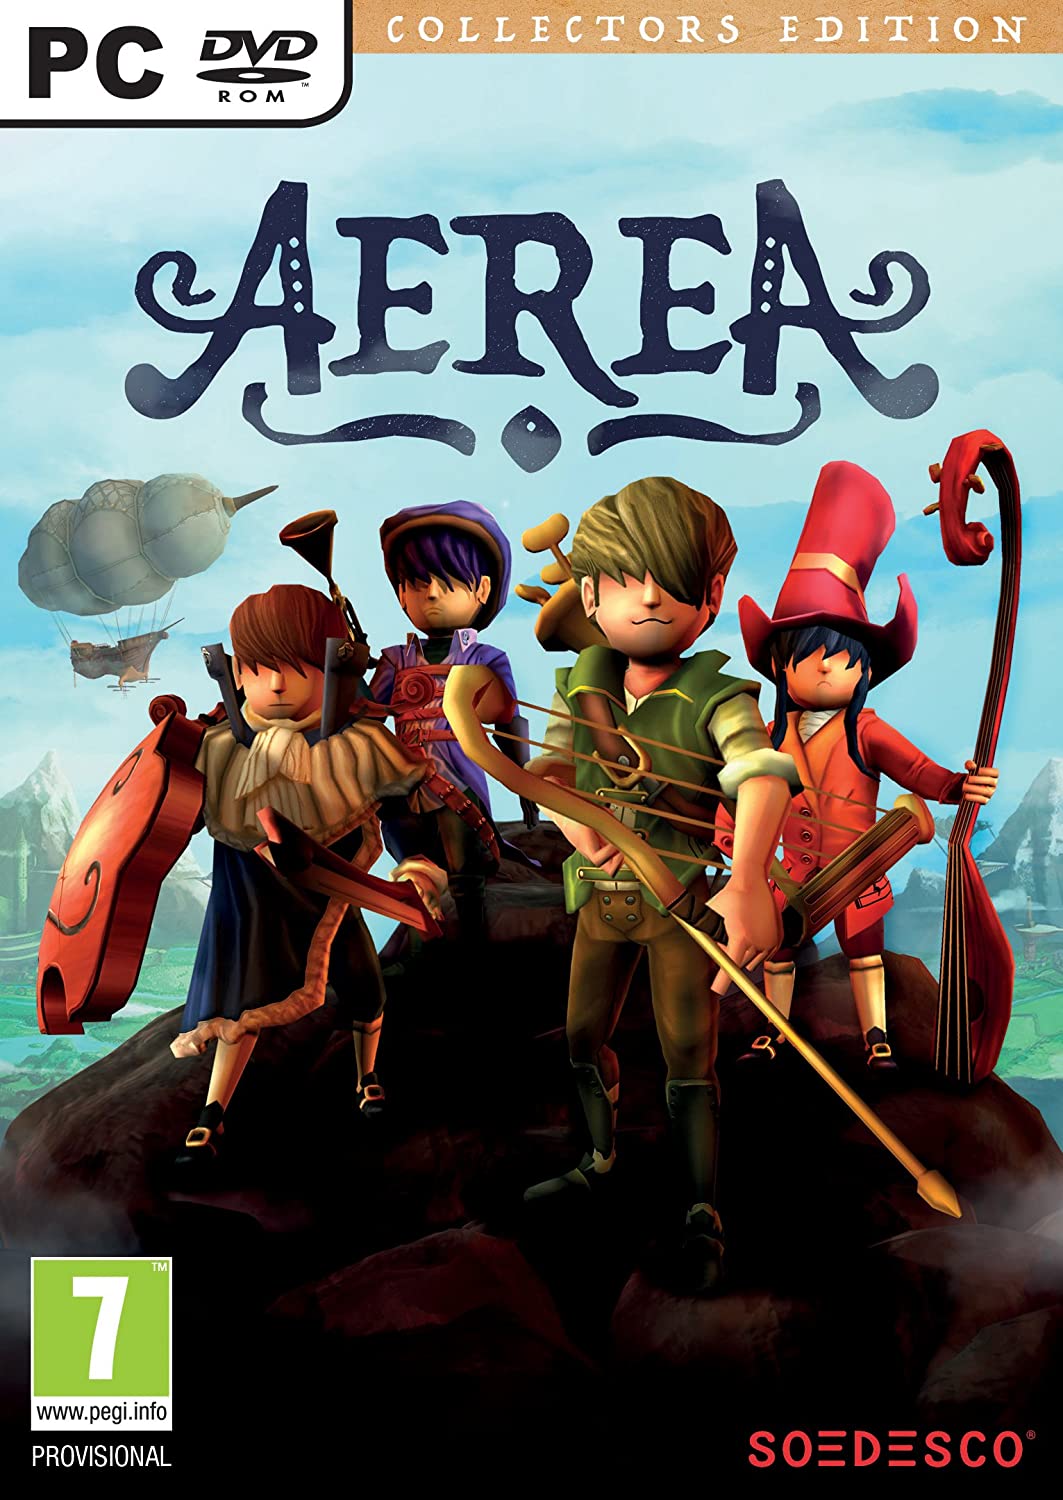 Aerea Collector's Edition (PC DVD)